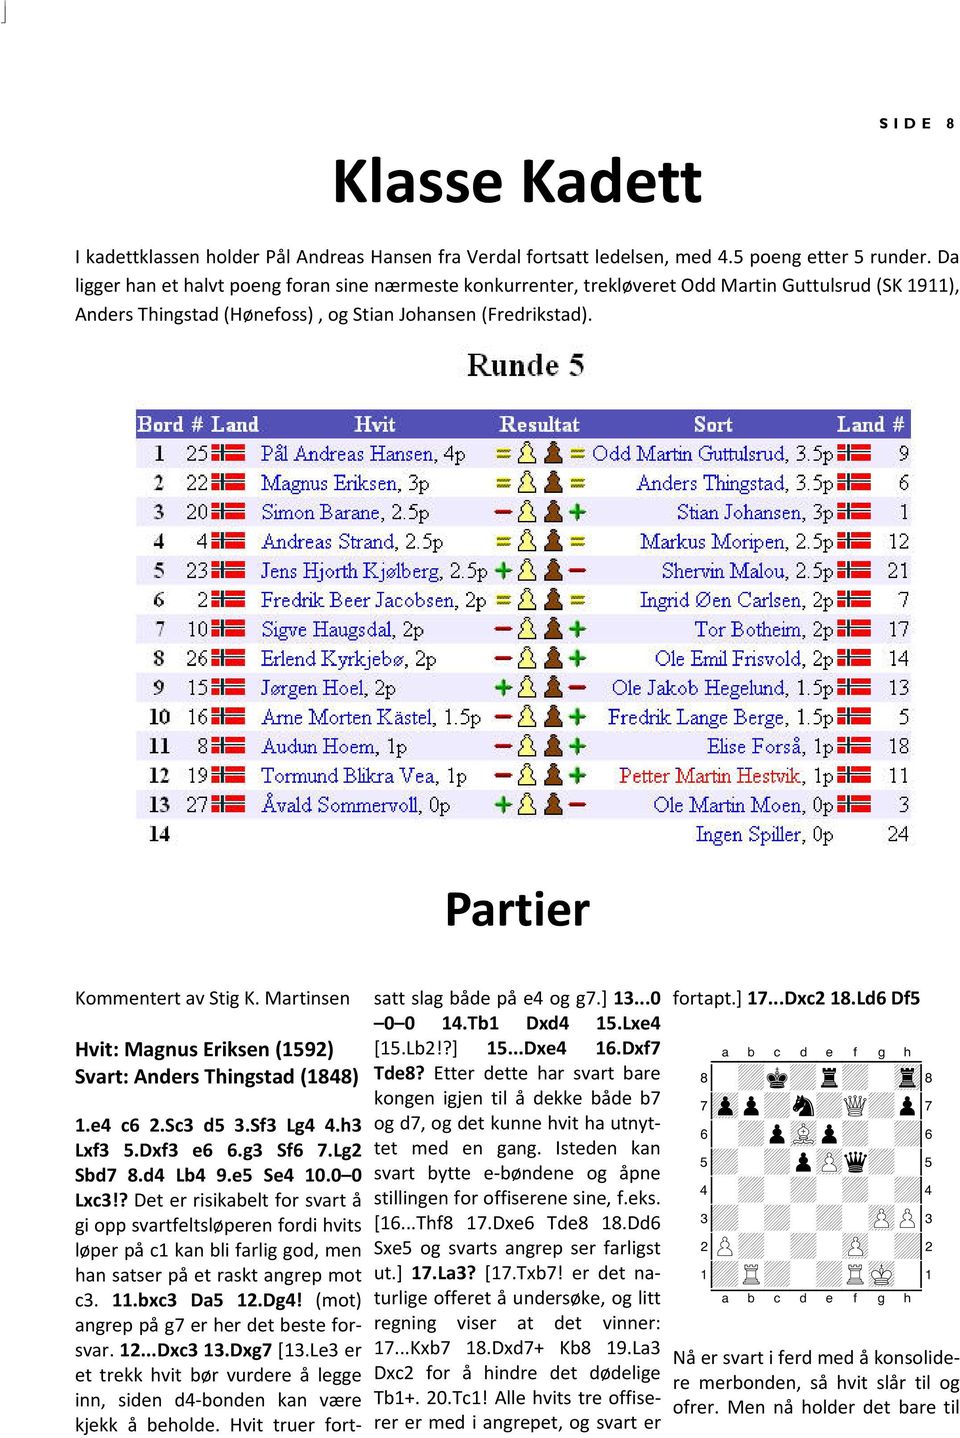 Martinsen Hvit: Magnus Eriksen (1592) Svart: Anders Thingstad (1848) 1.e4 c6 2.Sc3 d5 3.Sf3 Lg4 4.h3 Lxf3 5.Dxf3 e6 6.g3 Sf6 7.Lg2 Sbd7 8.d4 Lb4 9.e5 Se4 10.0 0 Lxc3!